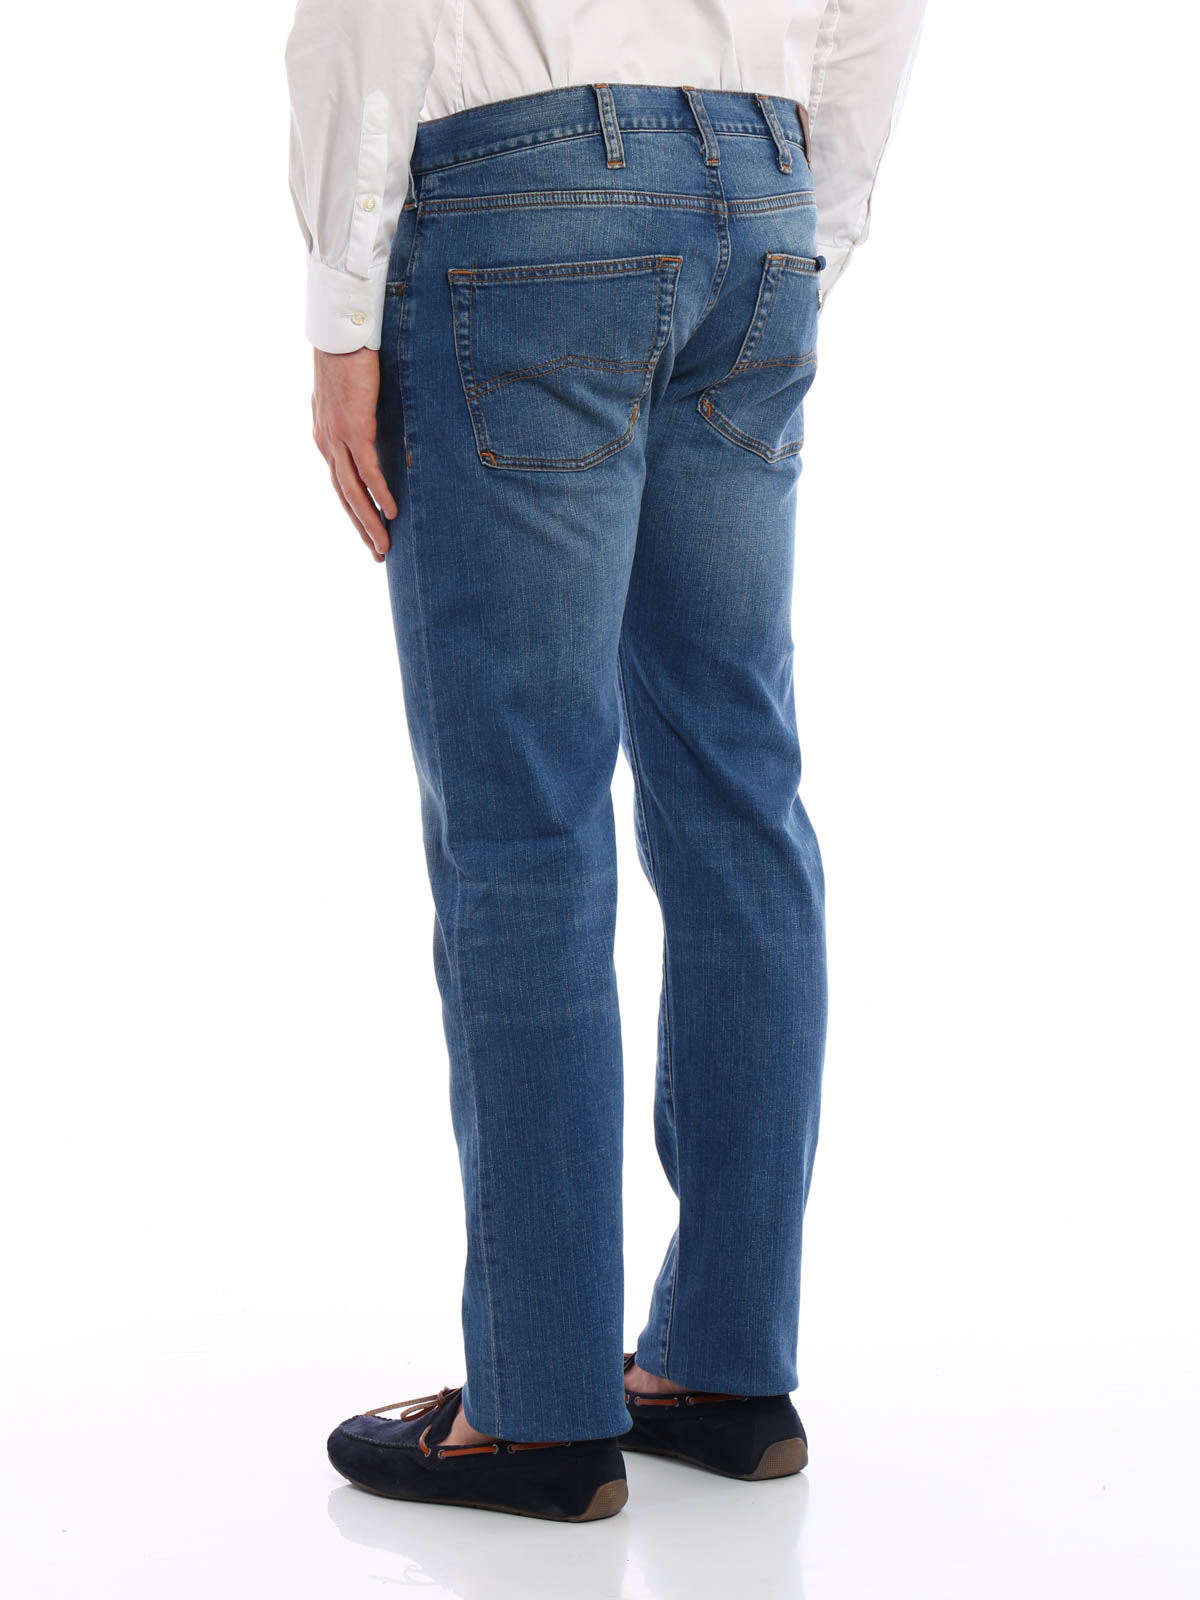 armani jeans outlet online